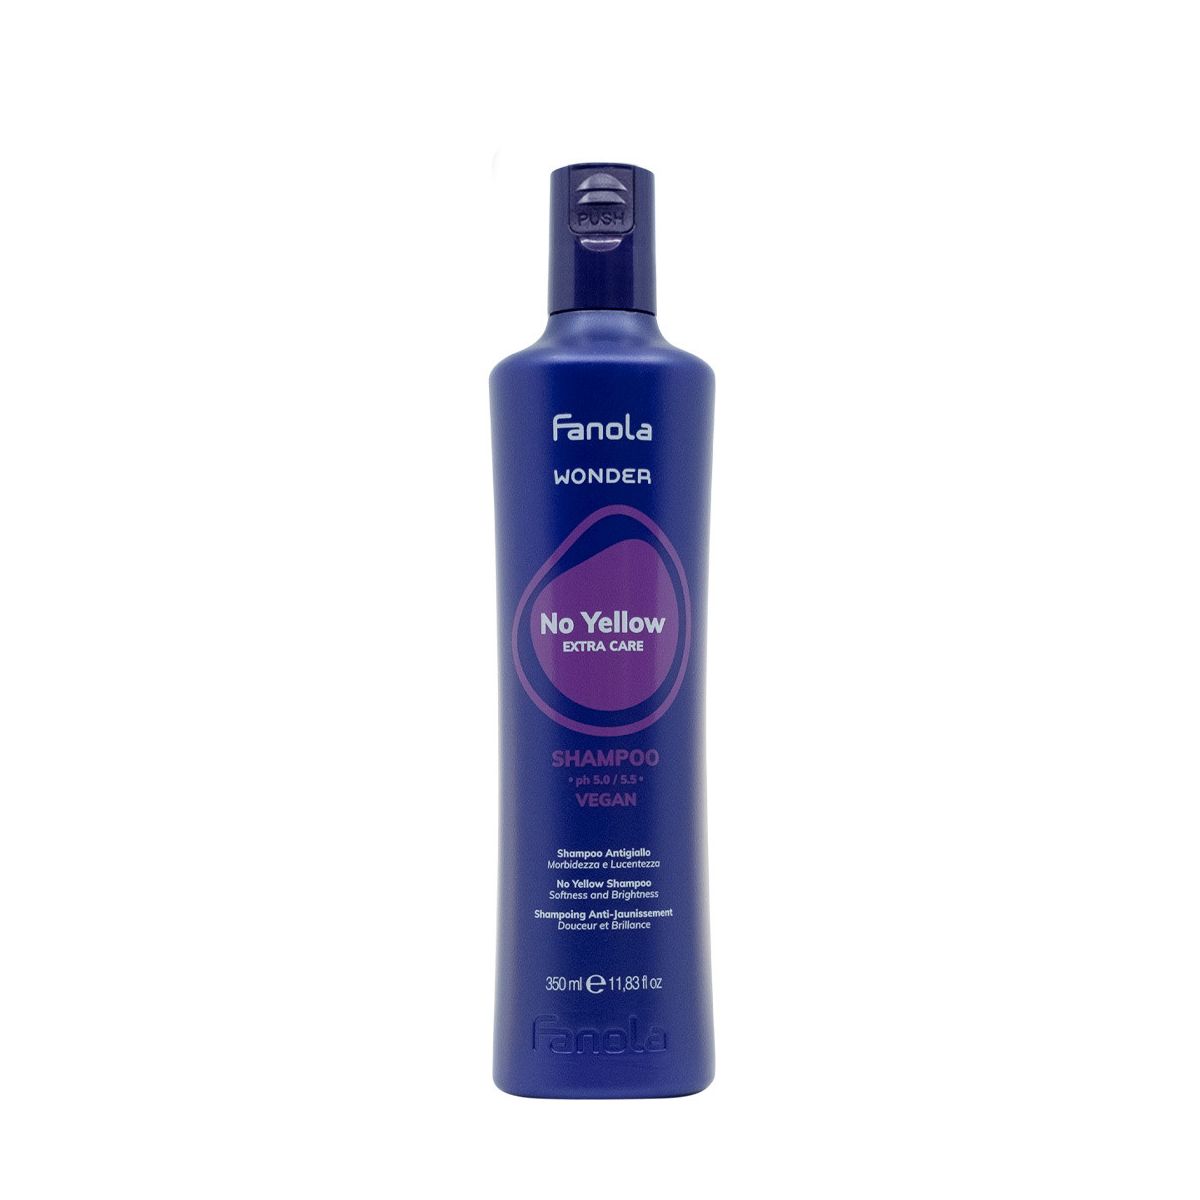 FANOLA WONDER No Yellow Extra Care Shampoo Vegan 350 ml